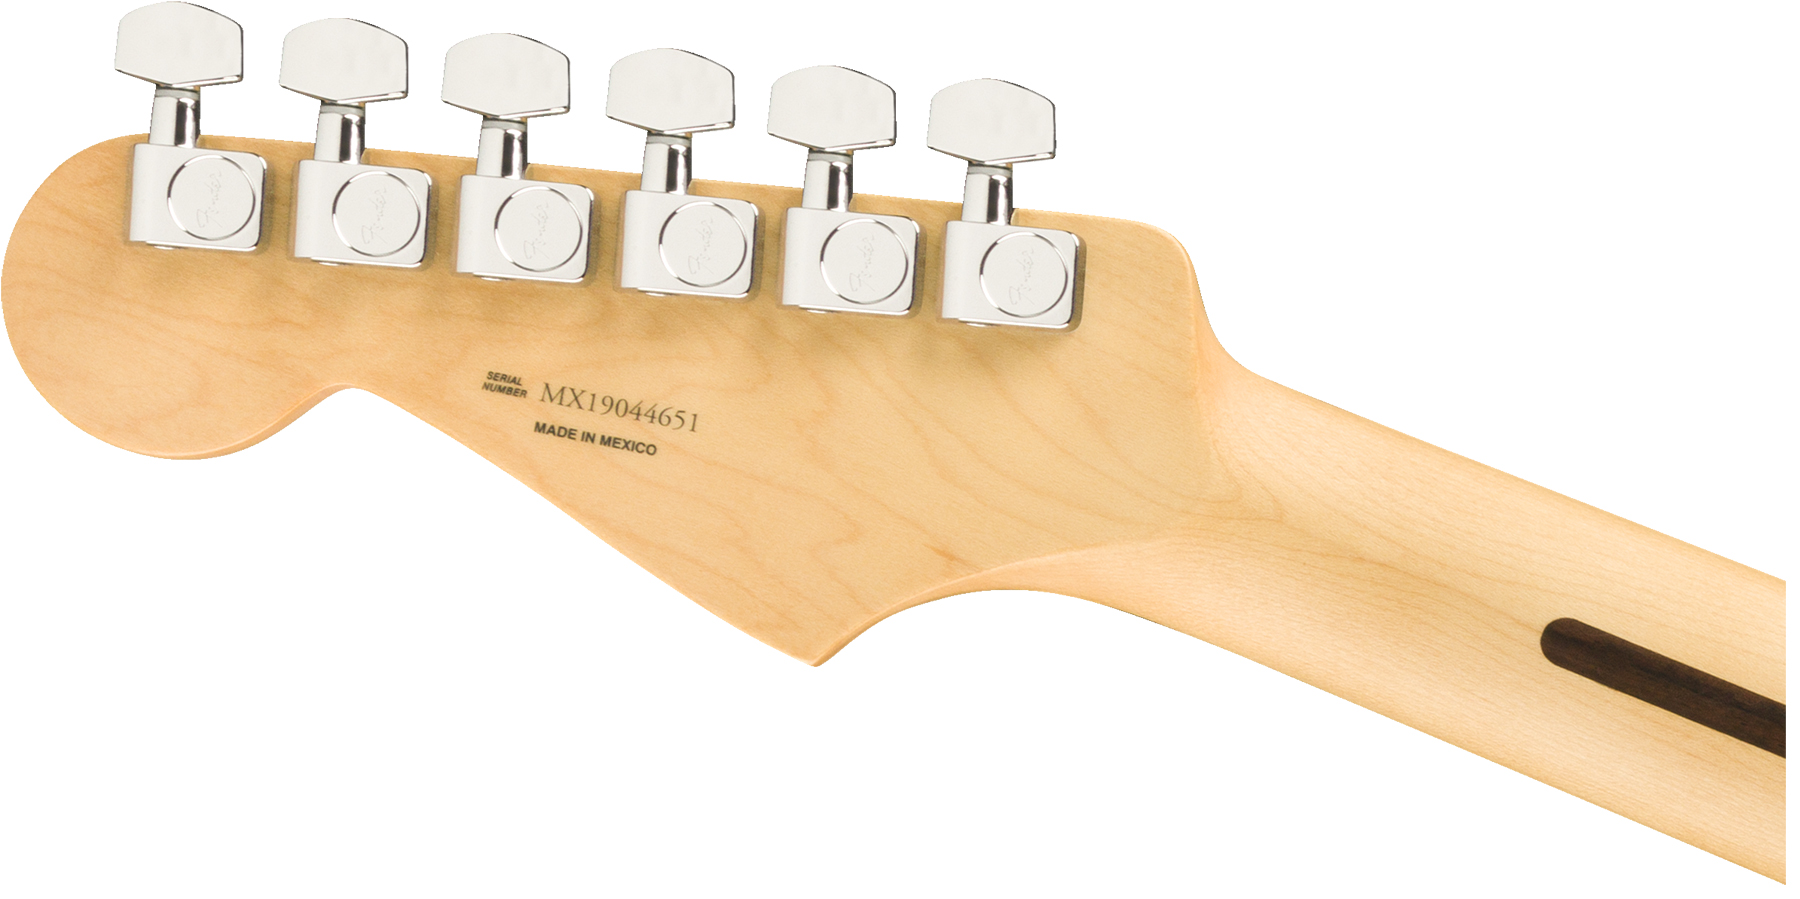 Fender Strat Player Mex 3s Trem Pf - Silver - Str shape electric guitar - Variation 3